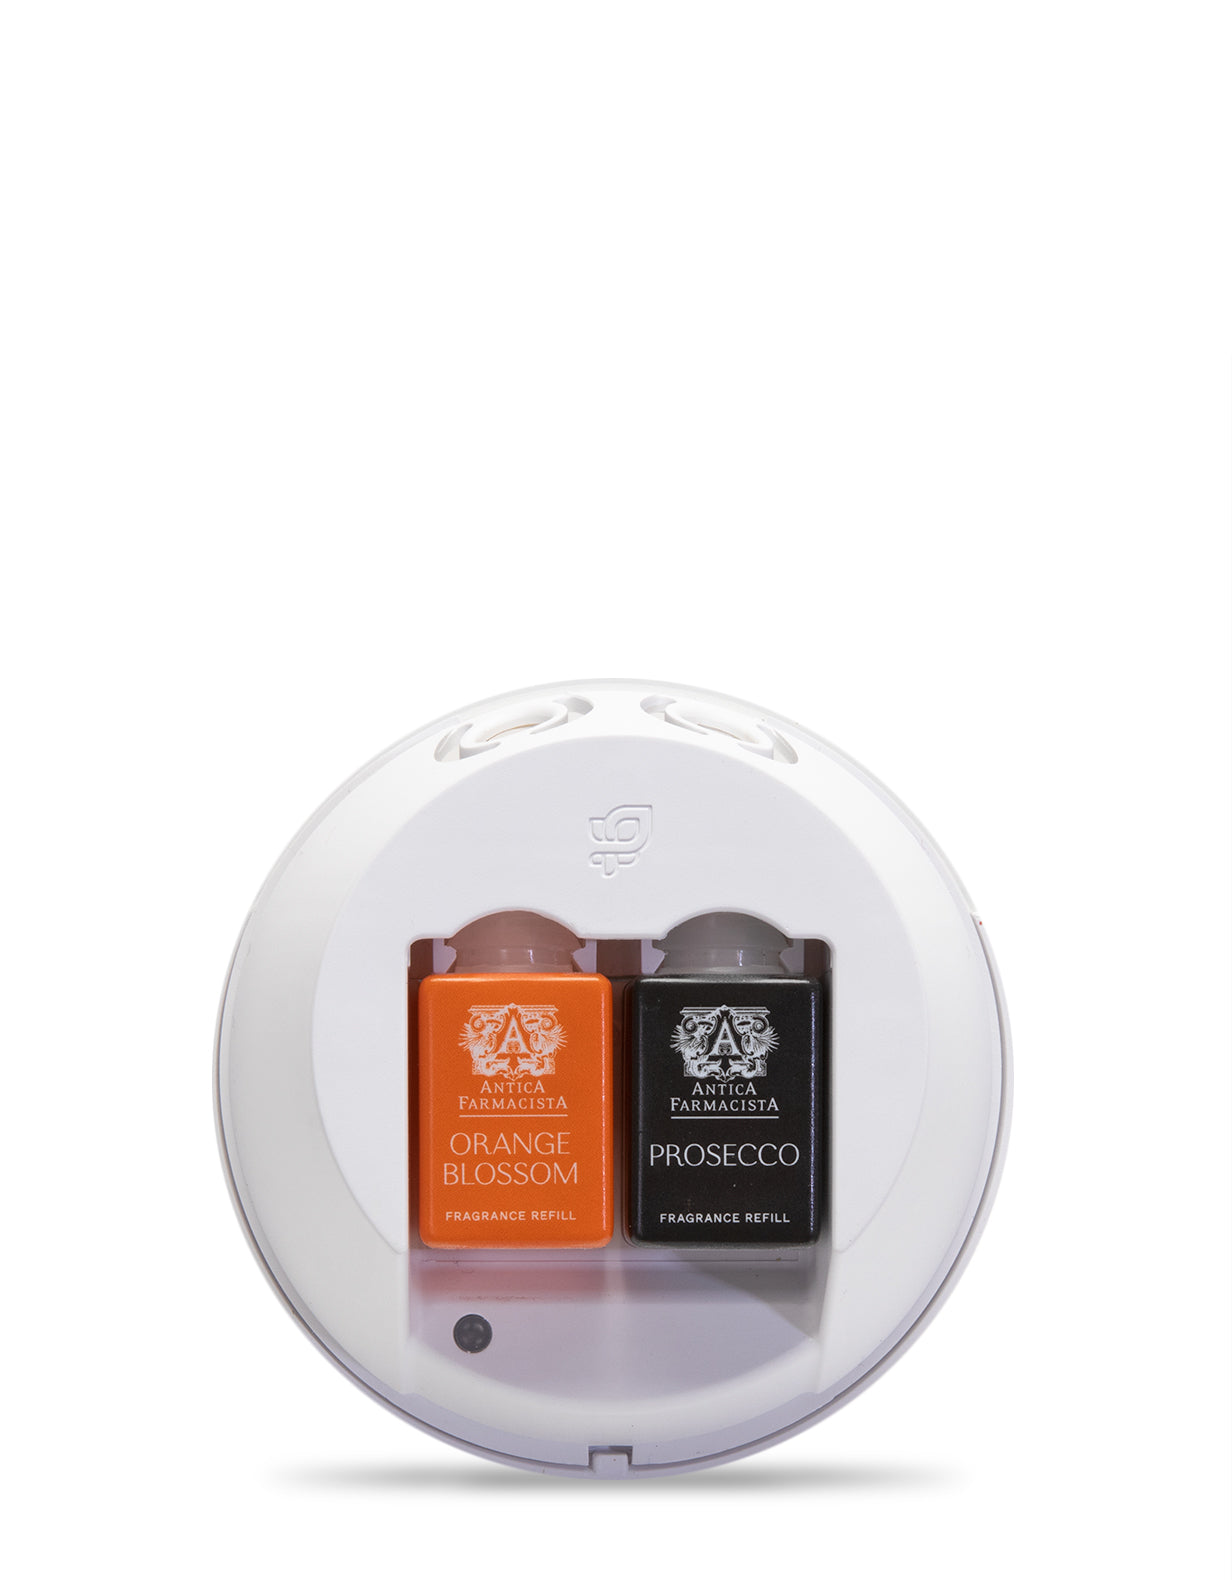 Pura Smart Home Fragrance Diffuser Set